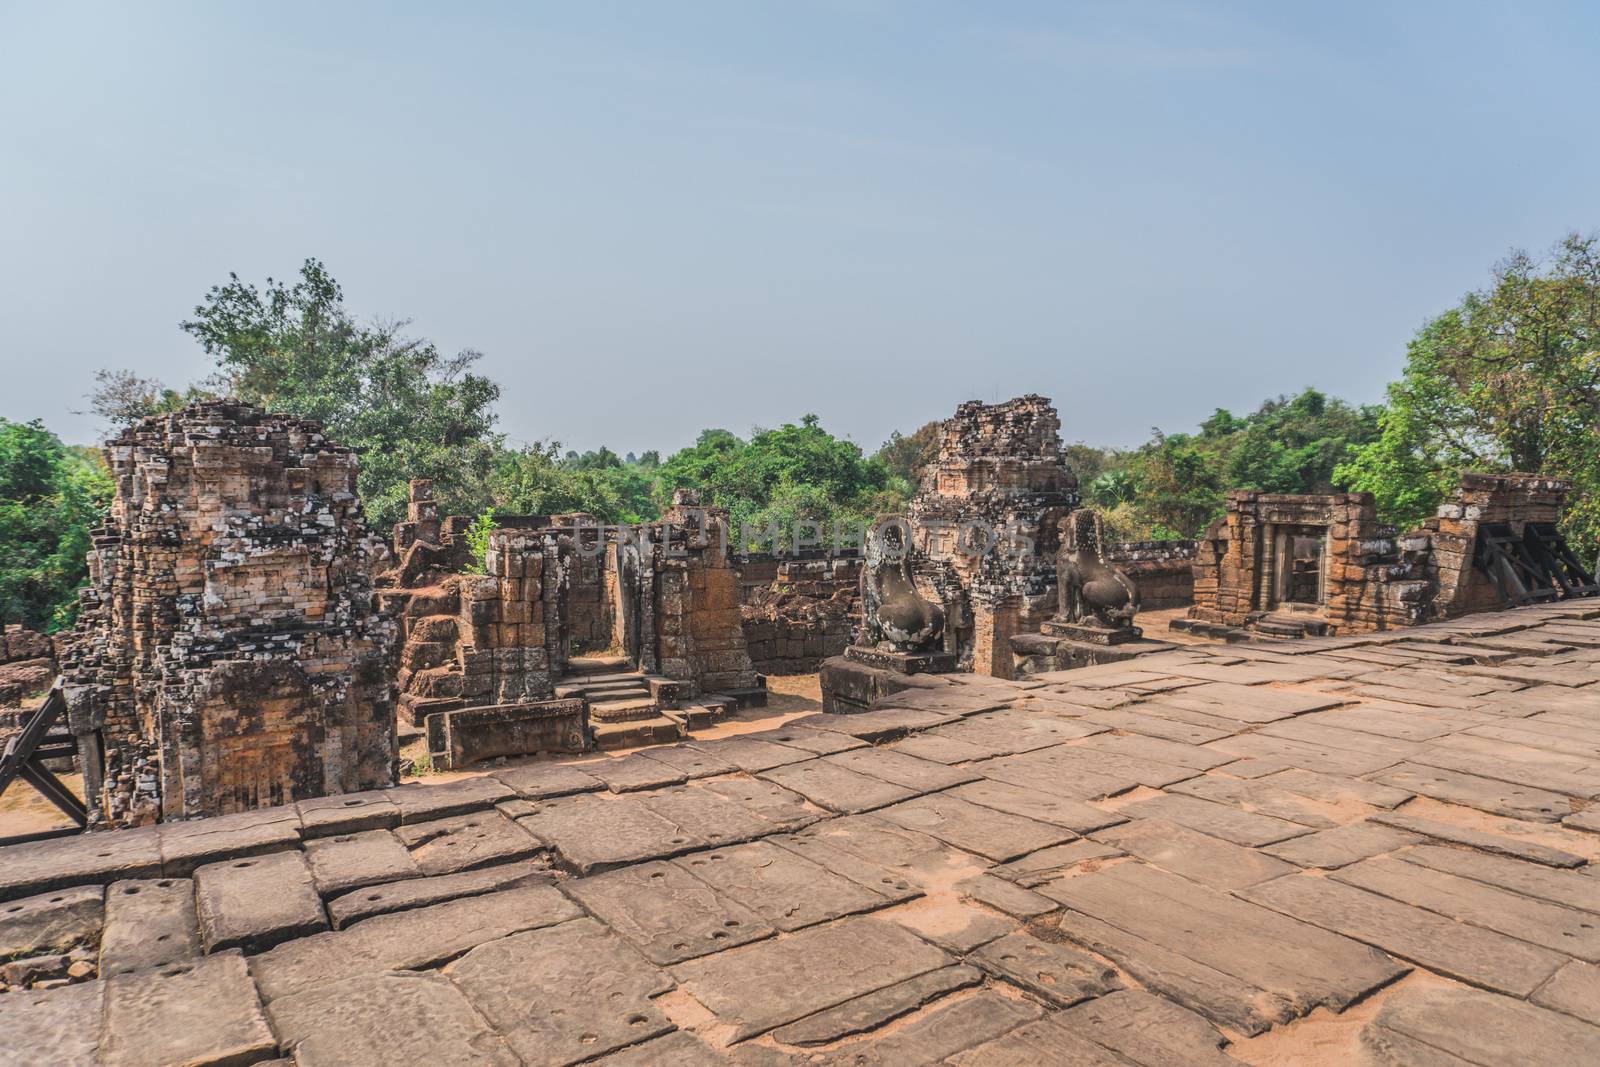 Ancient Angkor Wat Ruins Panorama. Pre Rup temple. Siem Reap, Cambodia 